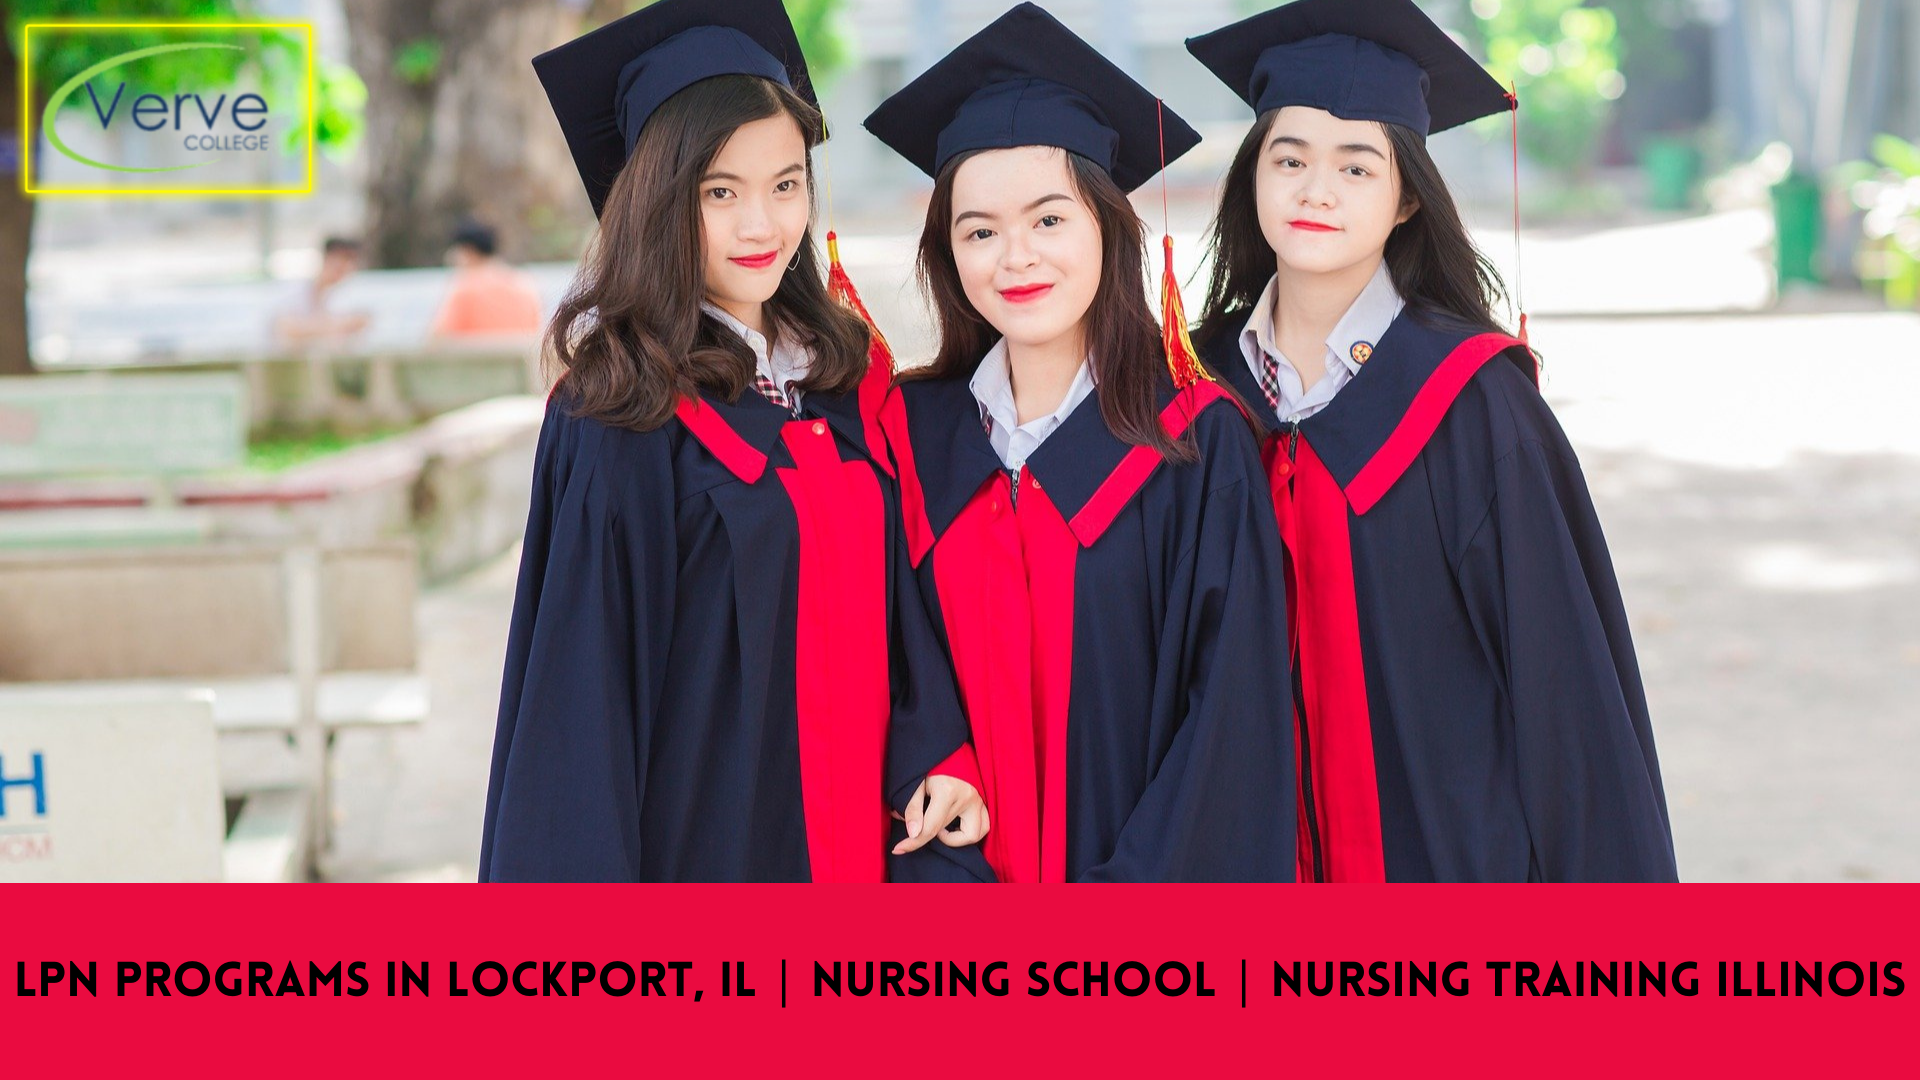 LPN Programs in Lockport, IL | Nursing School | Nursing Training Illinois